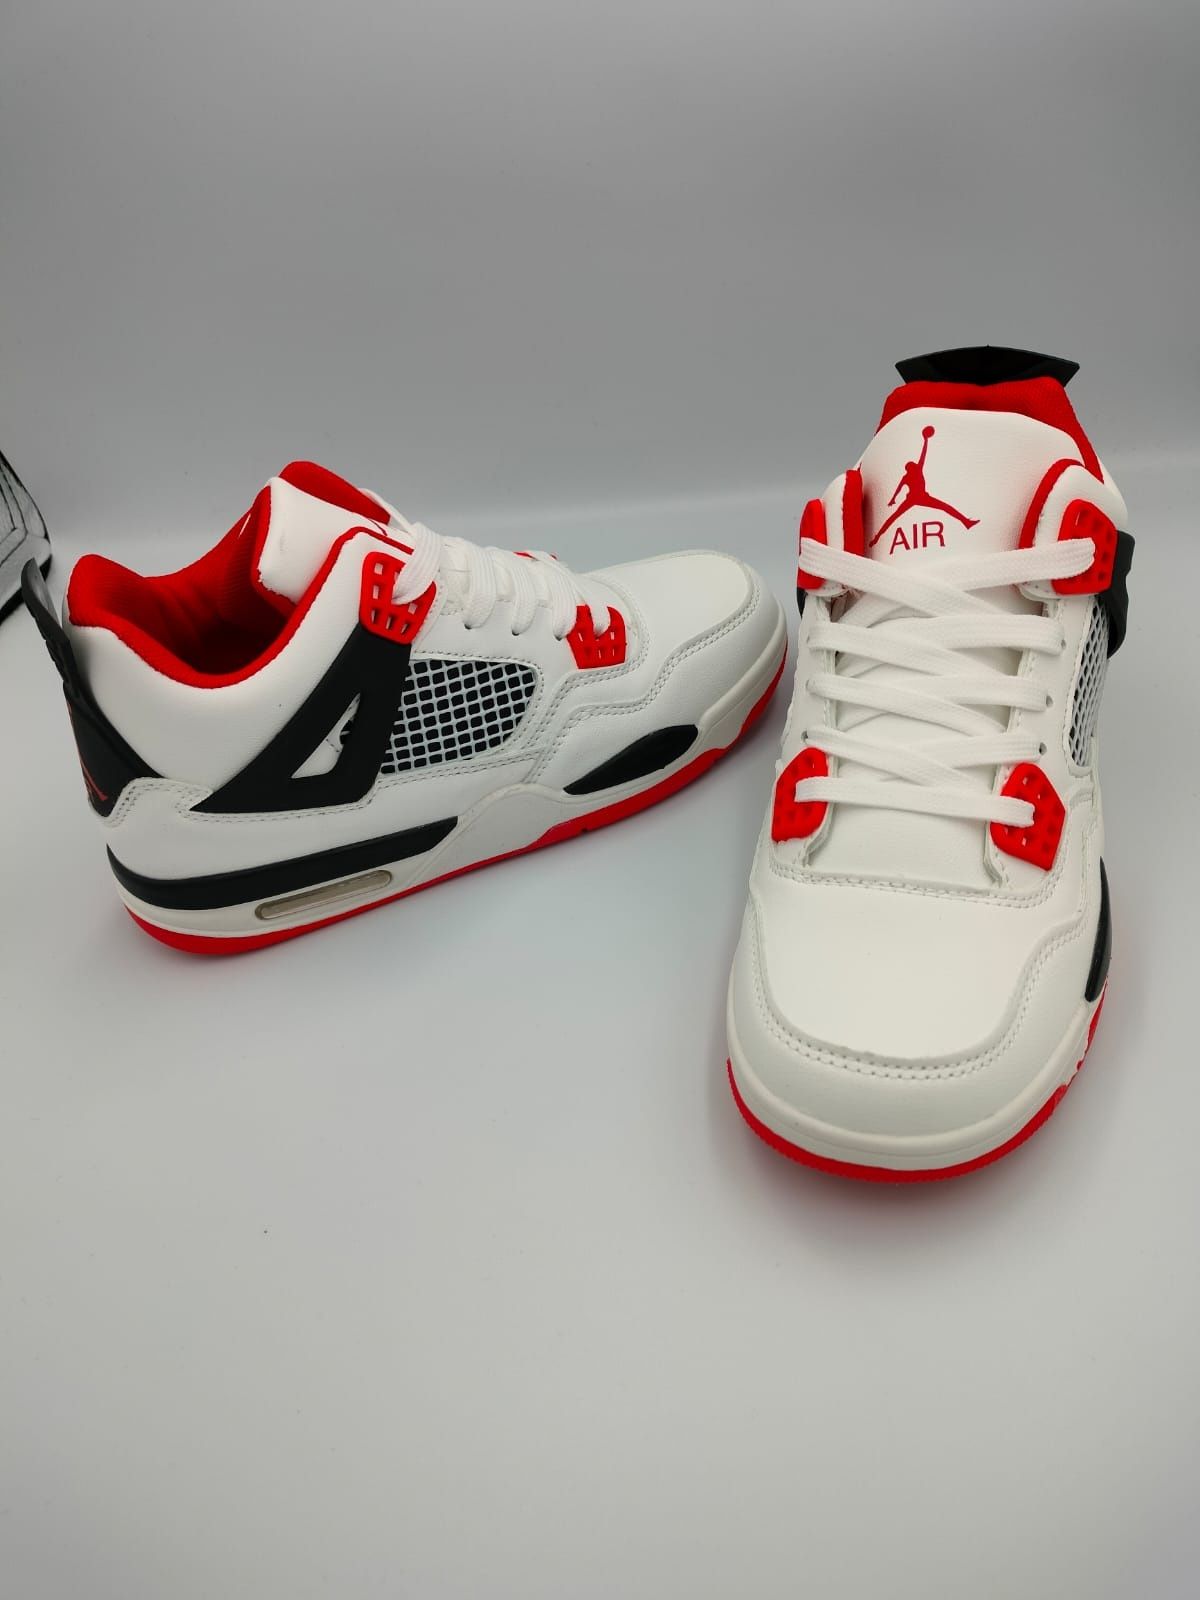 Nowość Nike Air Jordan 4 Fire Red r 40 skarpetki Nike gratis